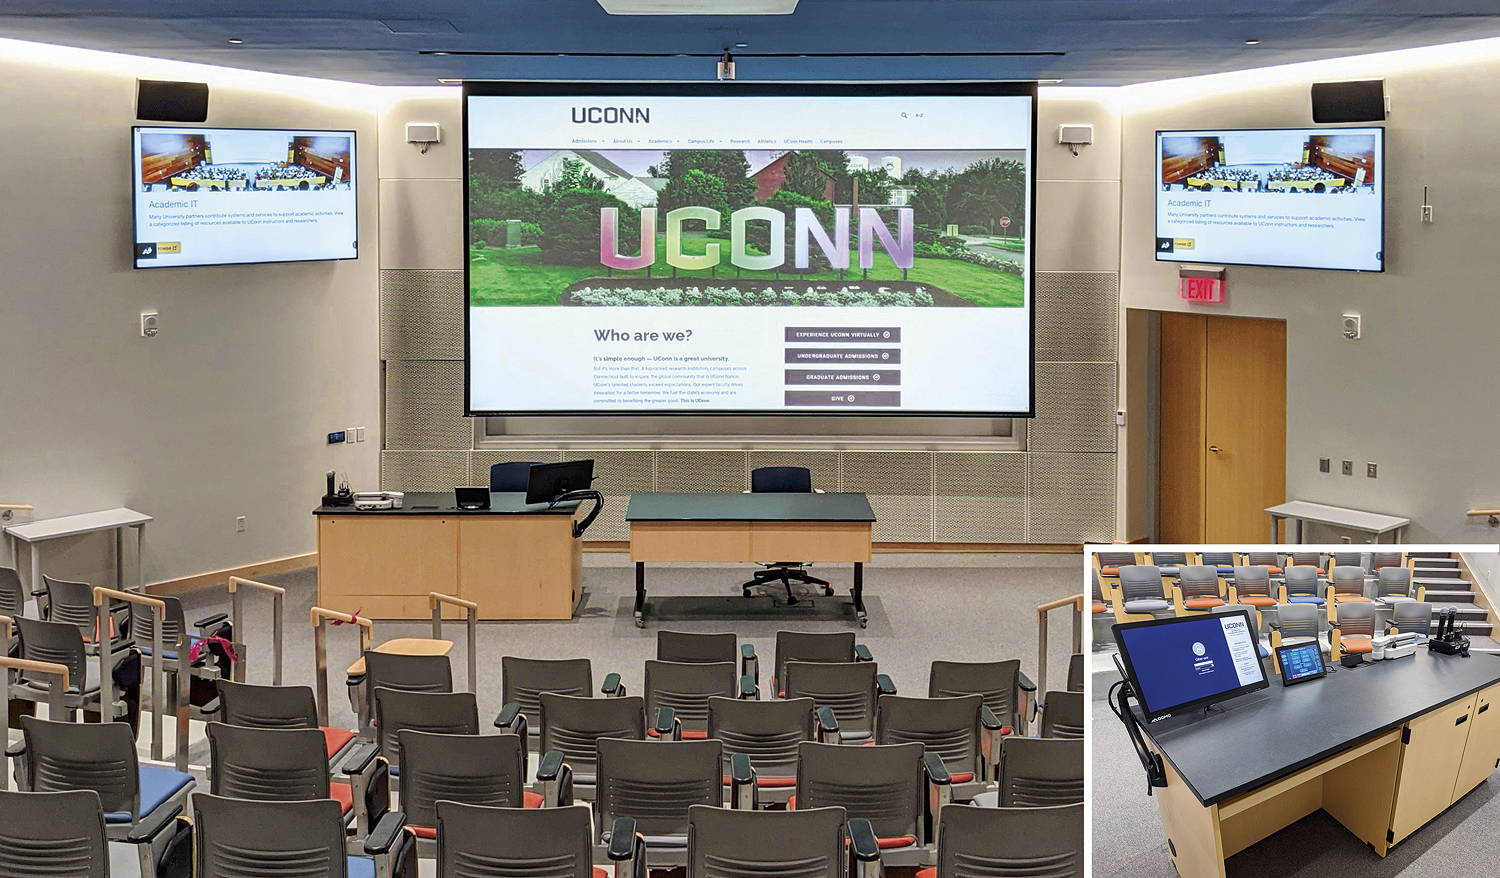 Gant 科学综合大楼阶梯教室配备天花板投影机和两台平板显示器 右下角插图显示为讲台